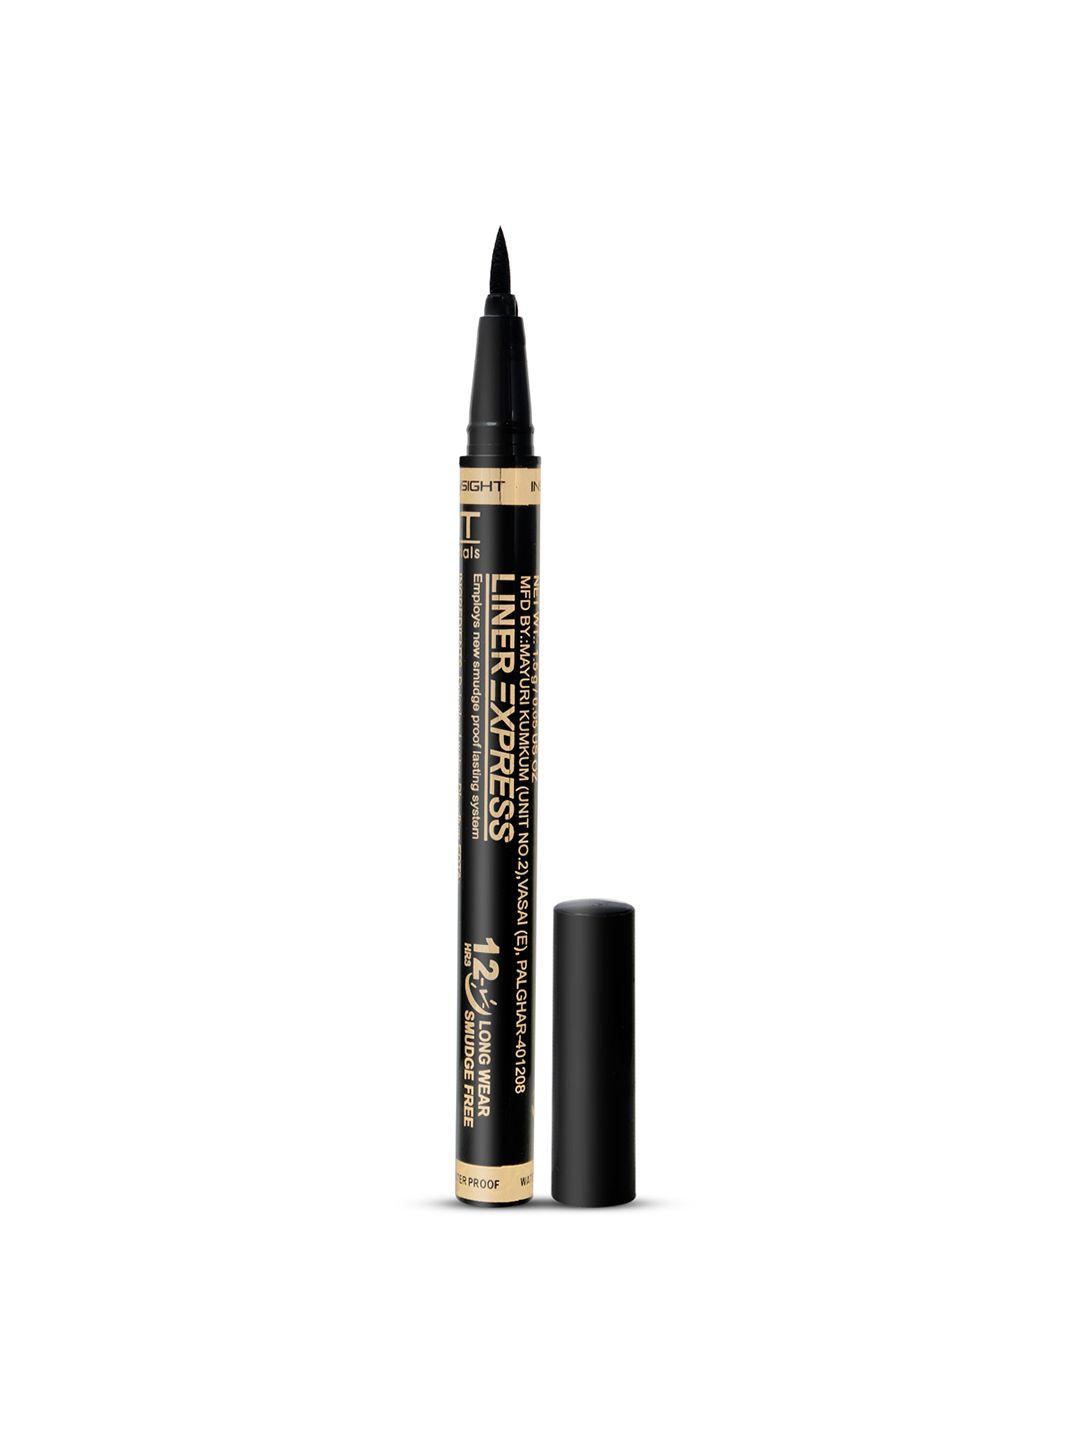 insight cosmetics liner express long-wear smudge-free eyeliner pen - black